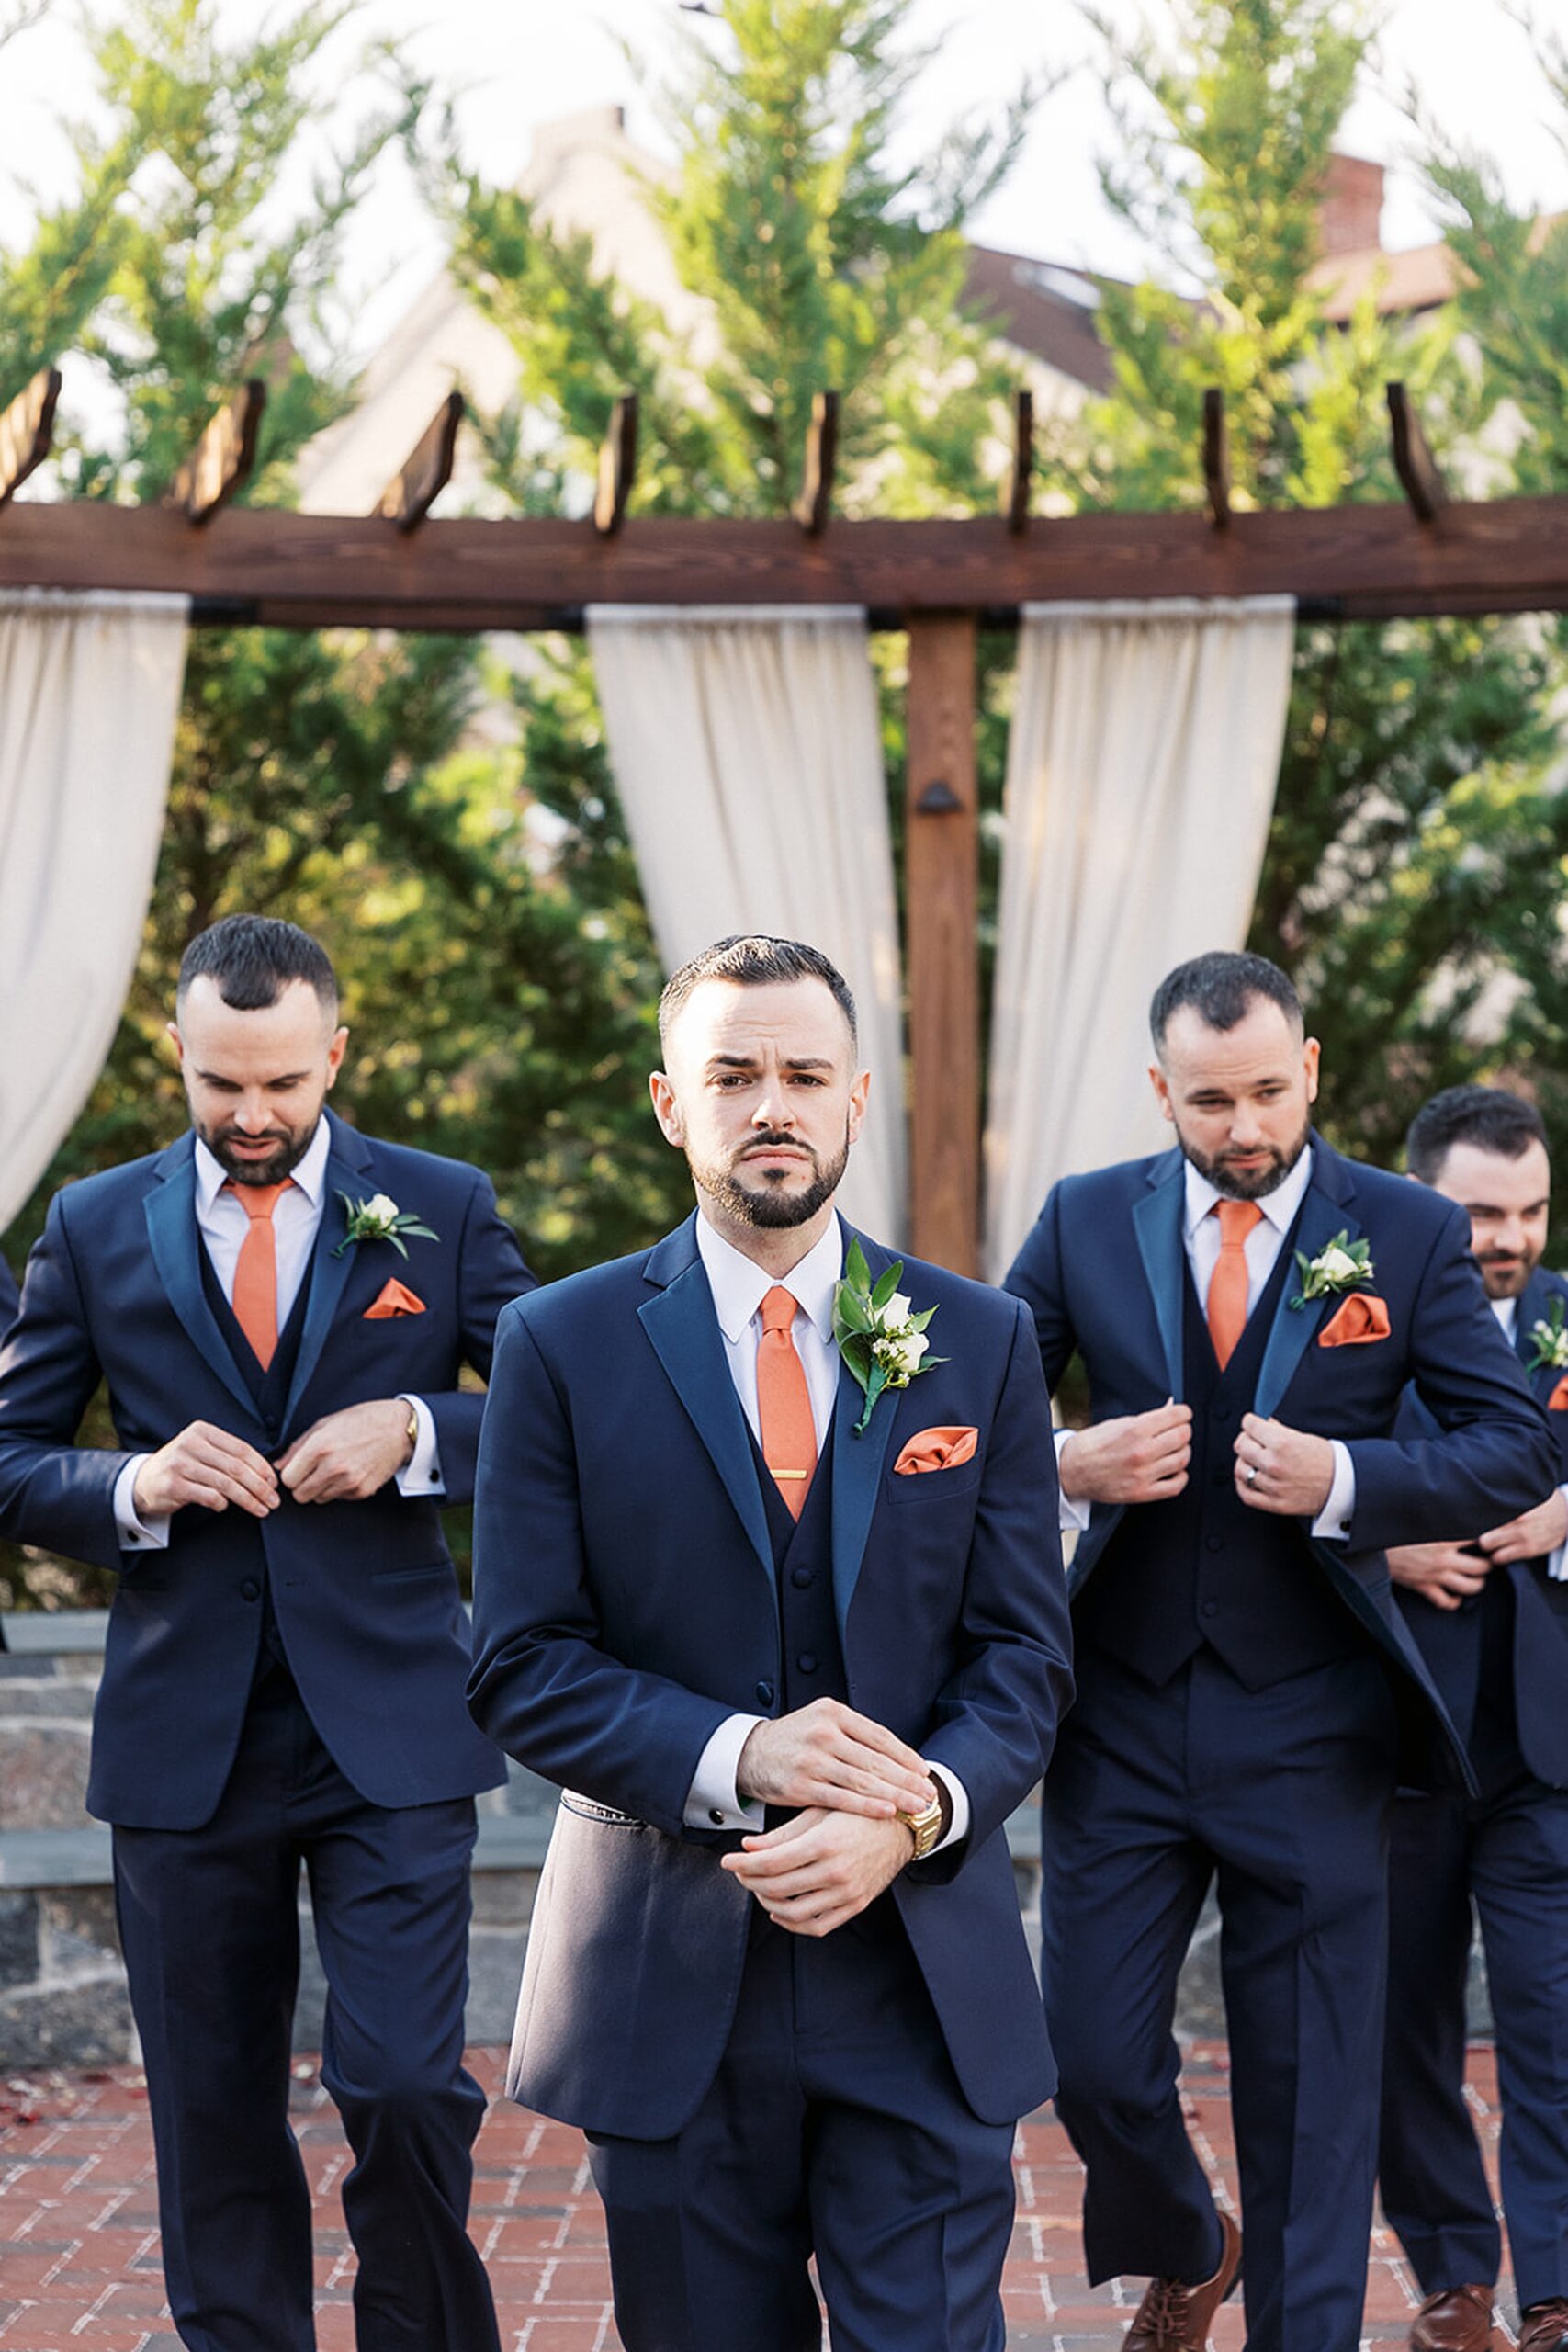 Groomsmen walk through a brick path in a garden adjusting their suits at a David's country inn wedding